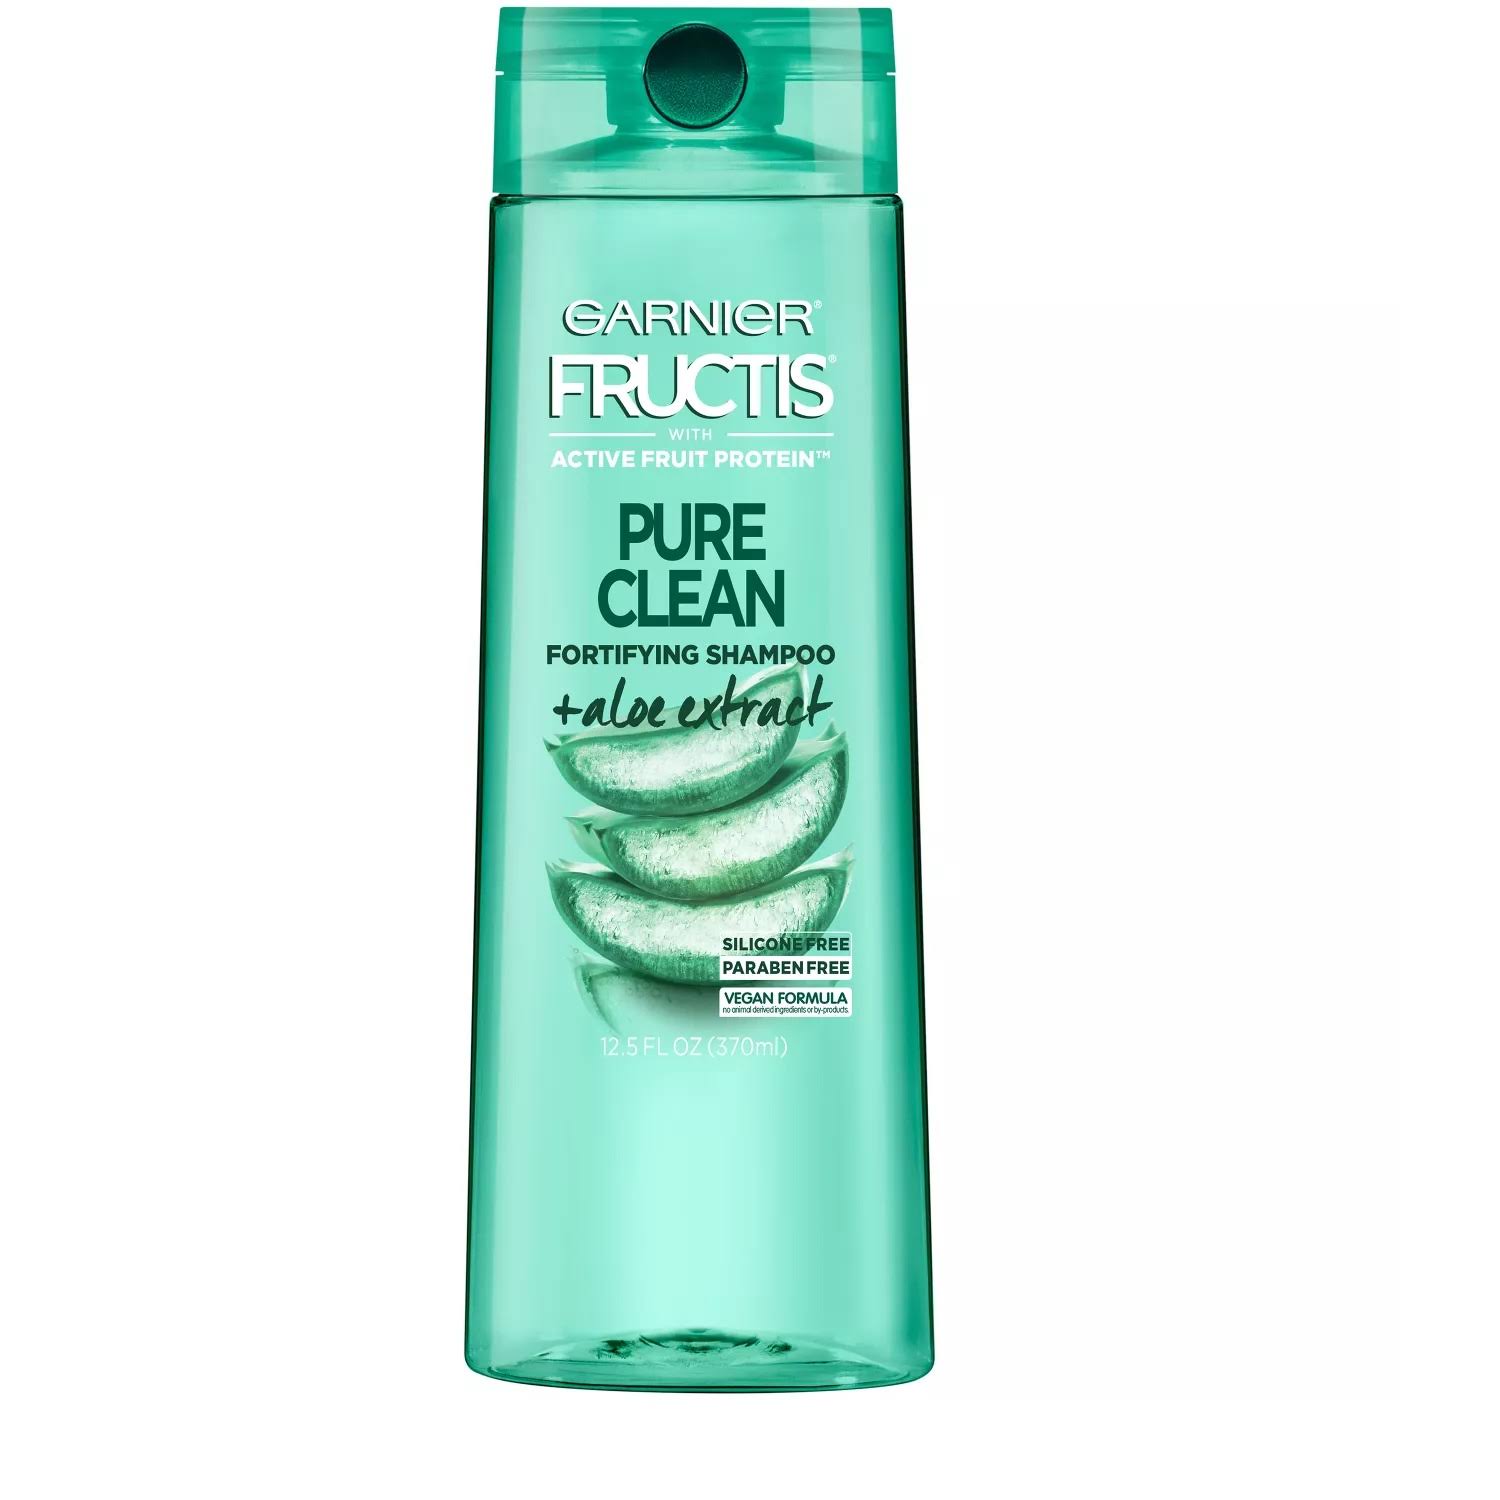 Garnier Fructis Pure Clean Fortifying Shampoo - 12.5oz